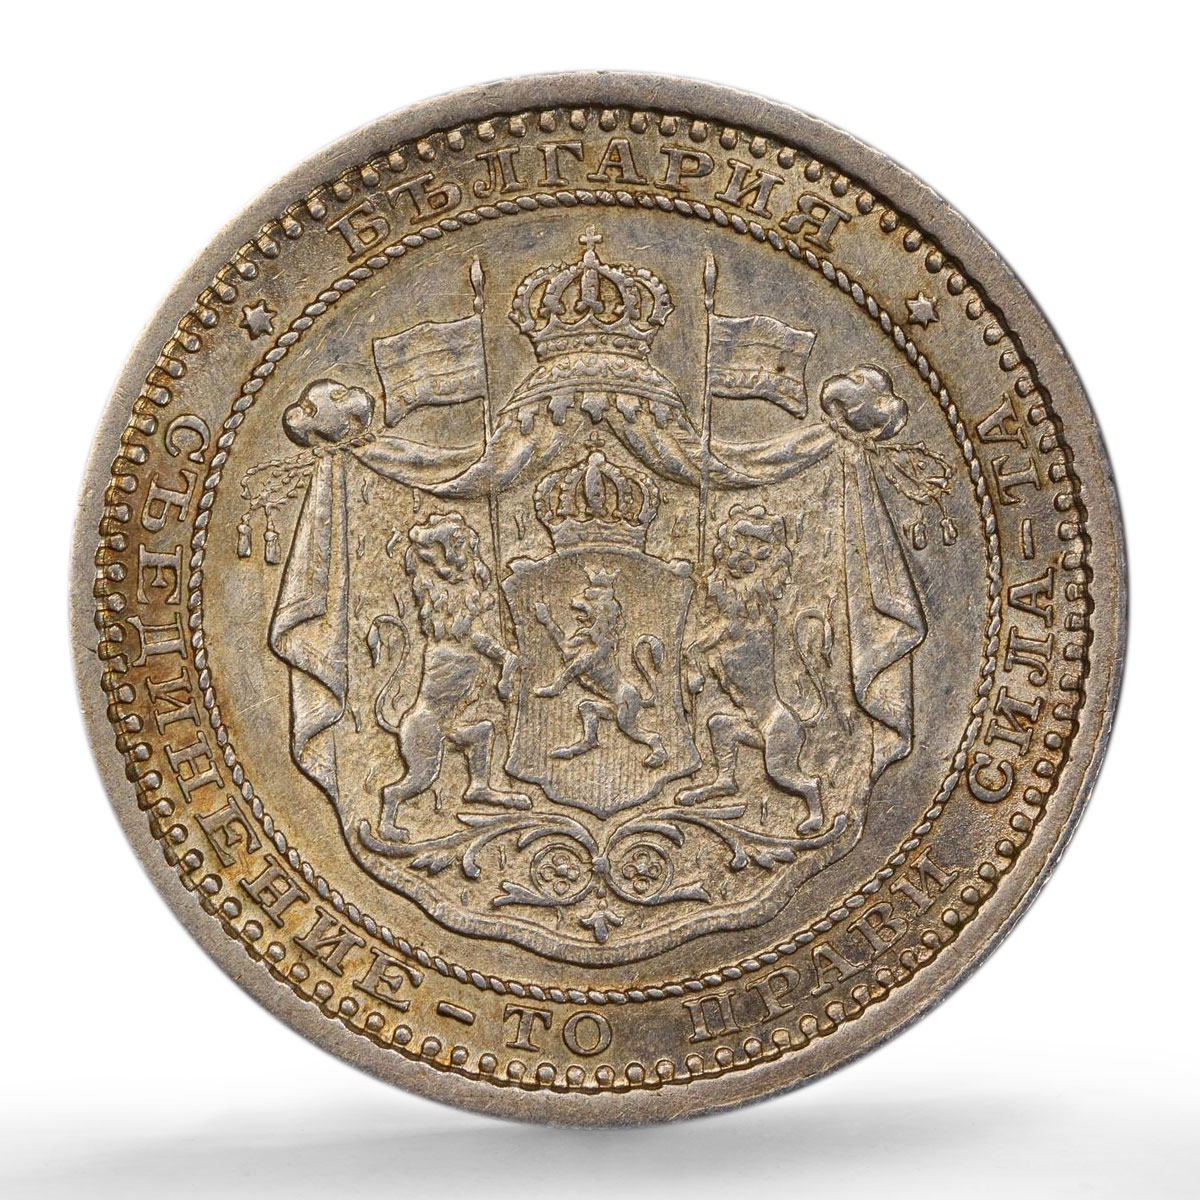 Bulgaria 50 stotinki Alexander I Coat of Arms AU Detail PCGS silver coin 1883